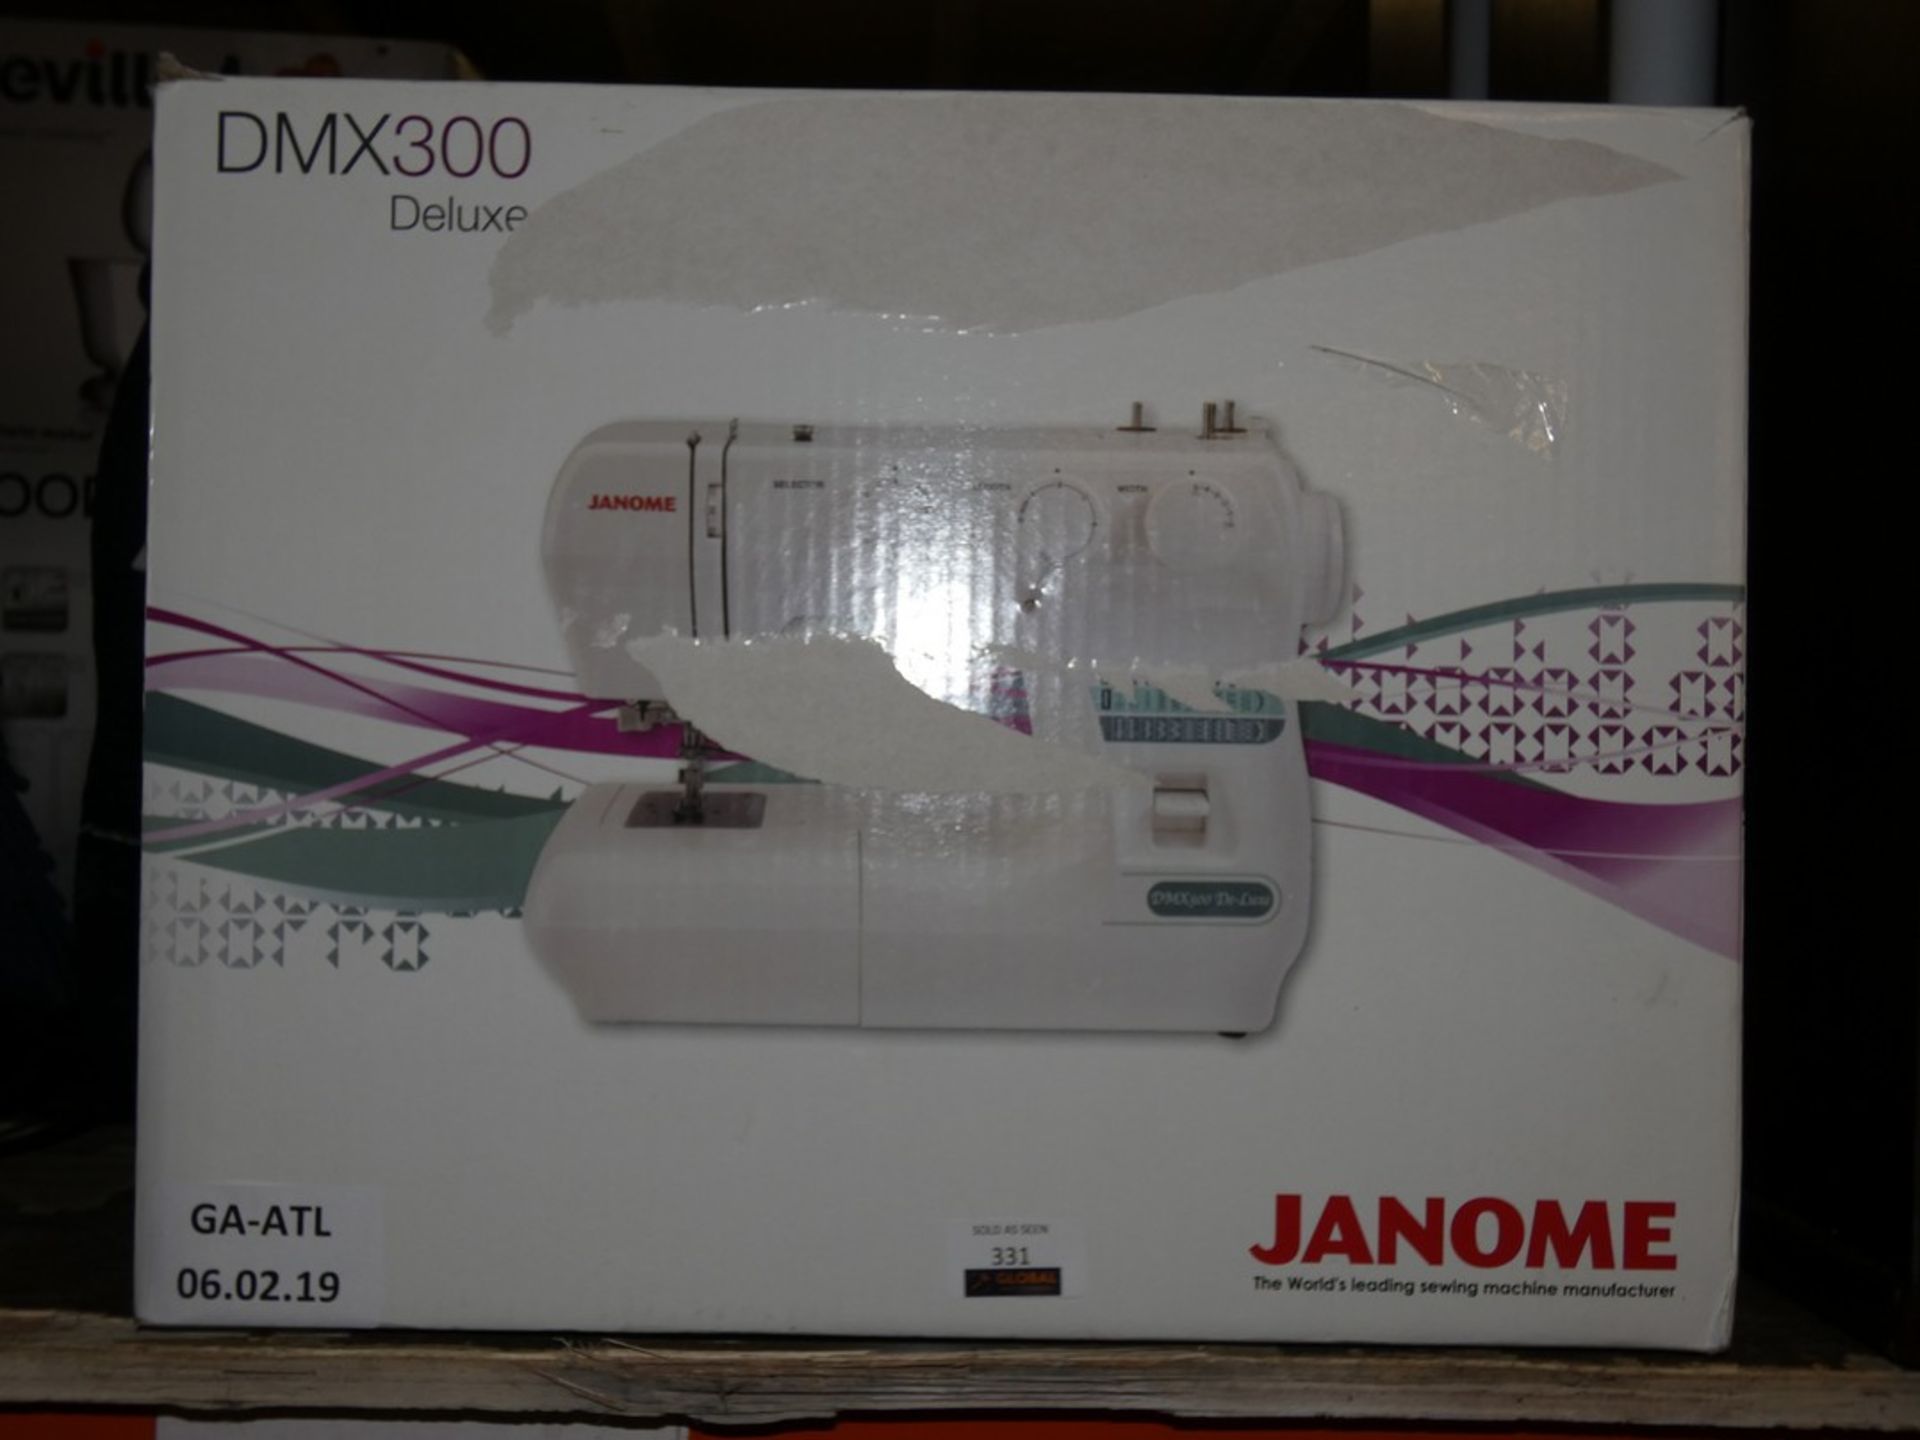 Boxed Janome Sewing Machine RRP £180 (Customer Return)